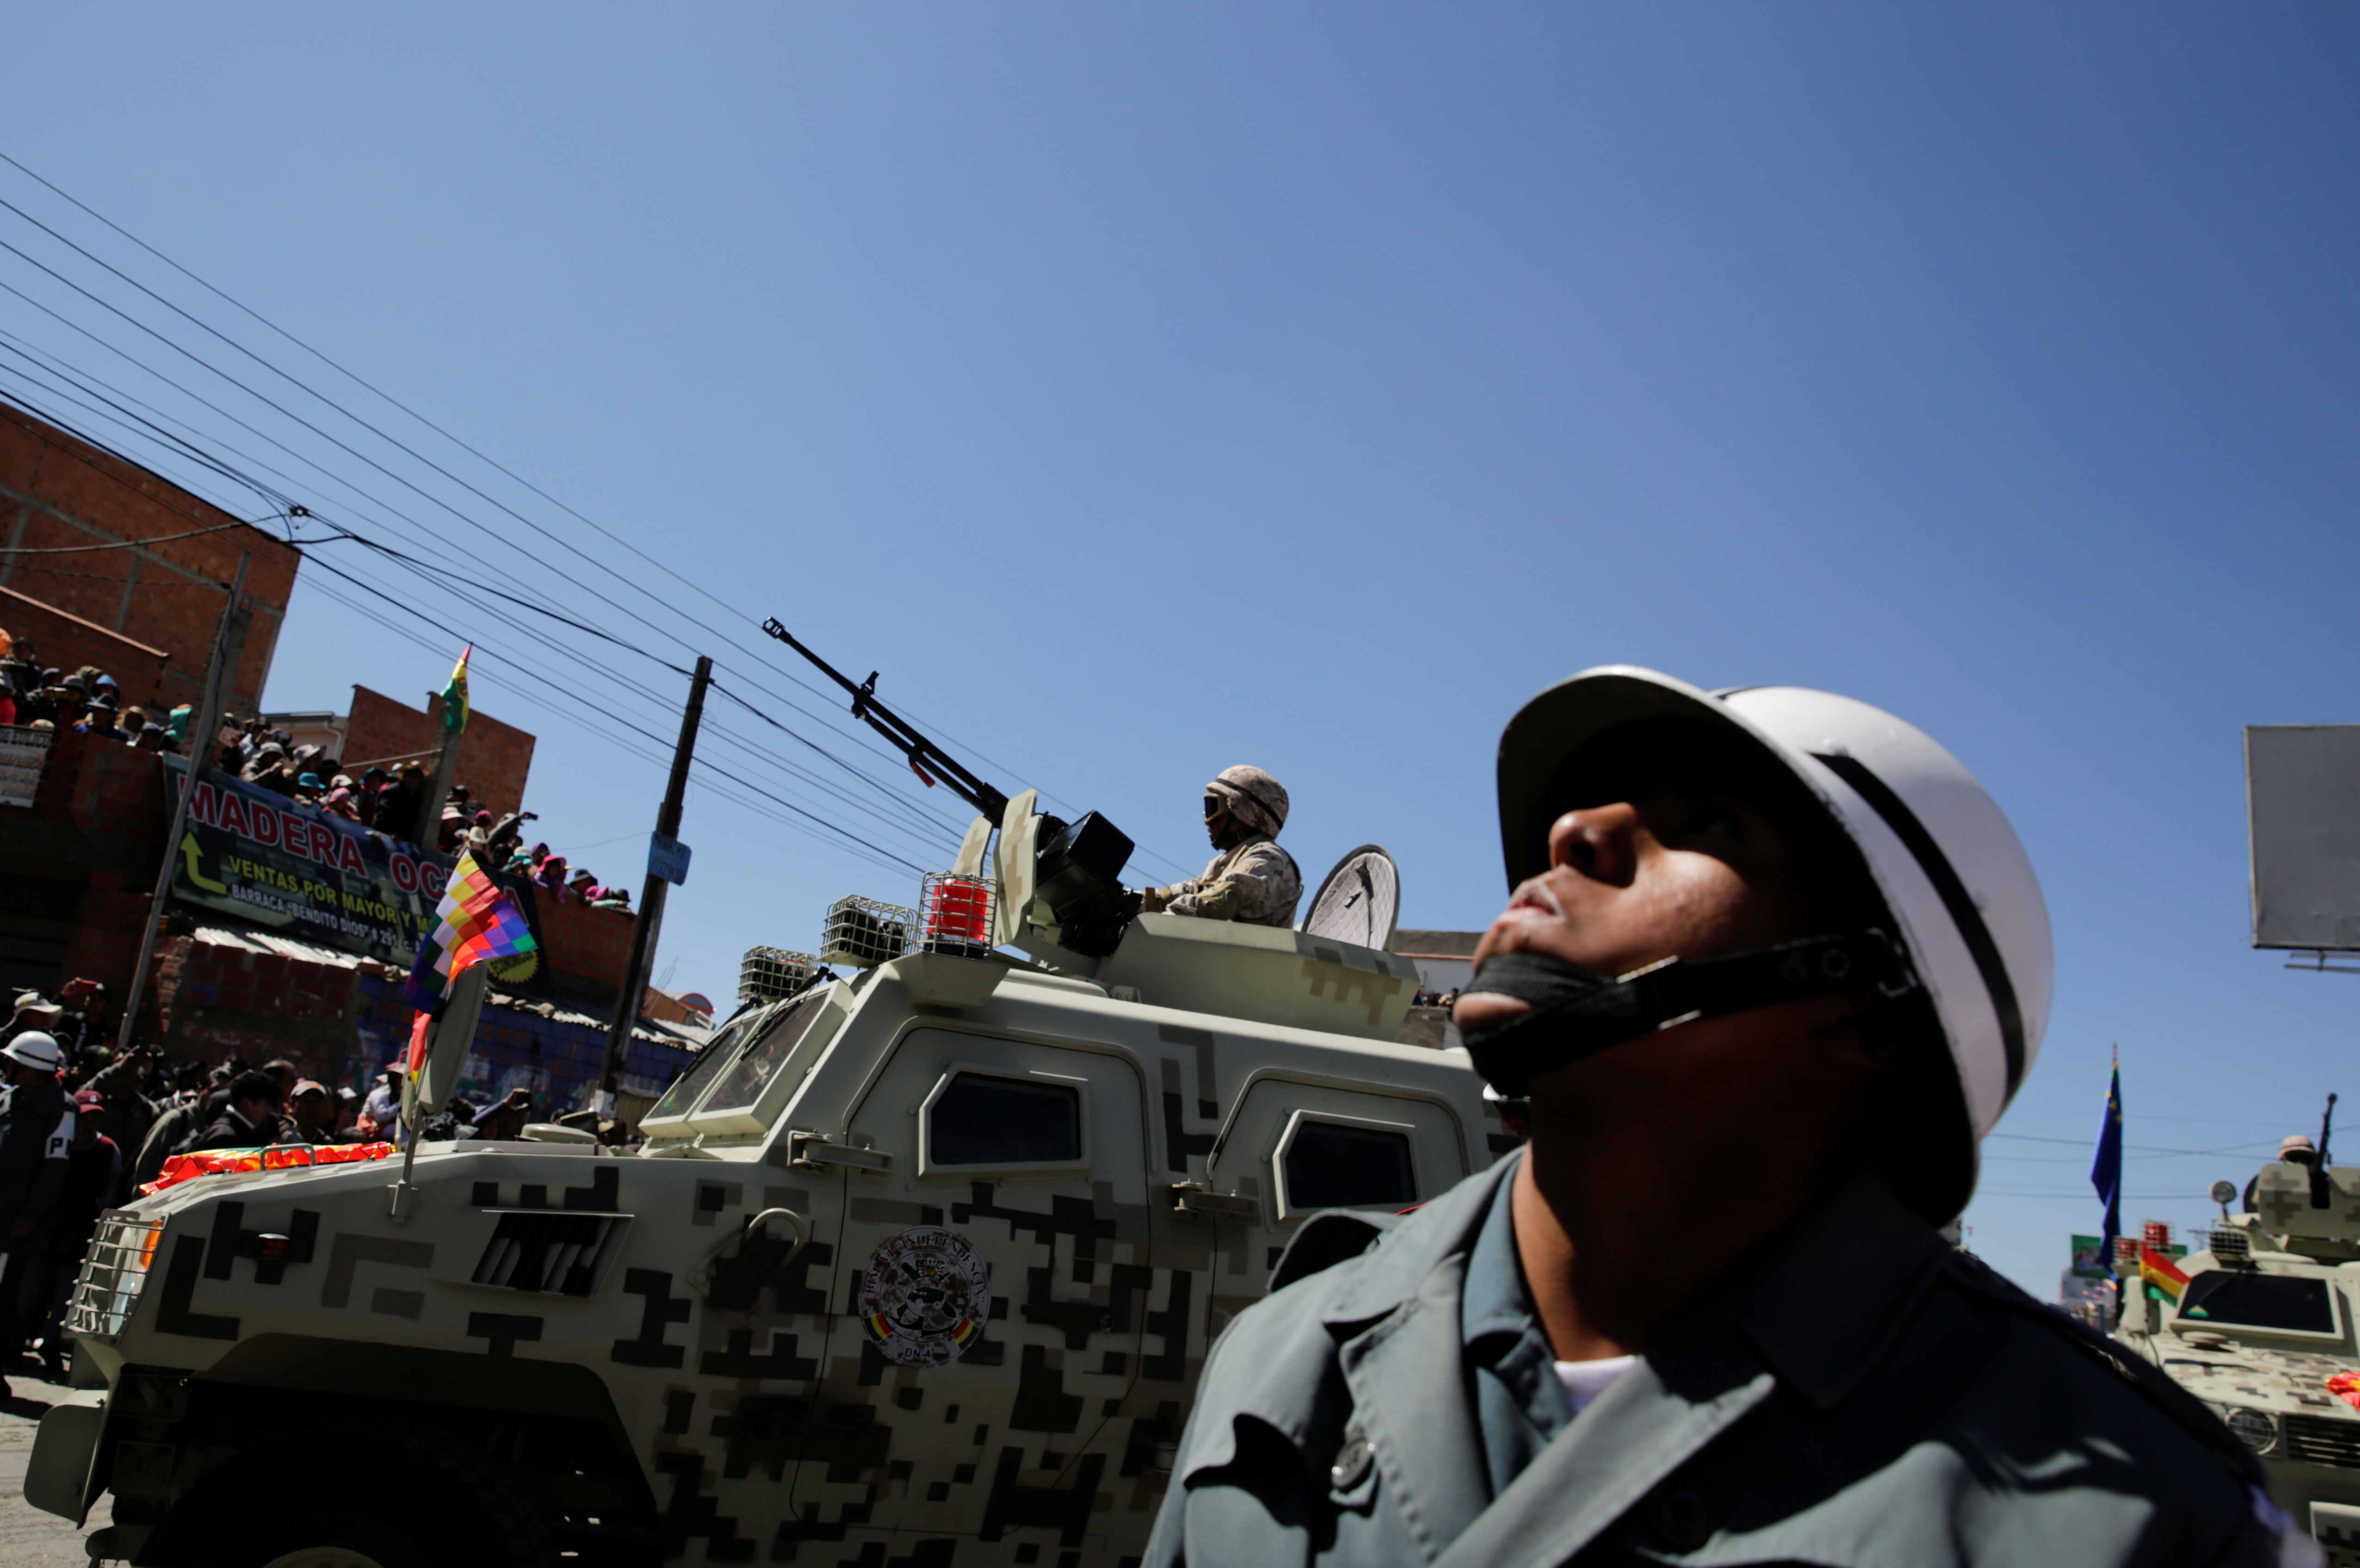 Fuerzas armadas de Bolivia ordenan operaciones para neutralizar grupos armados